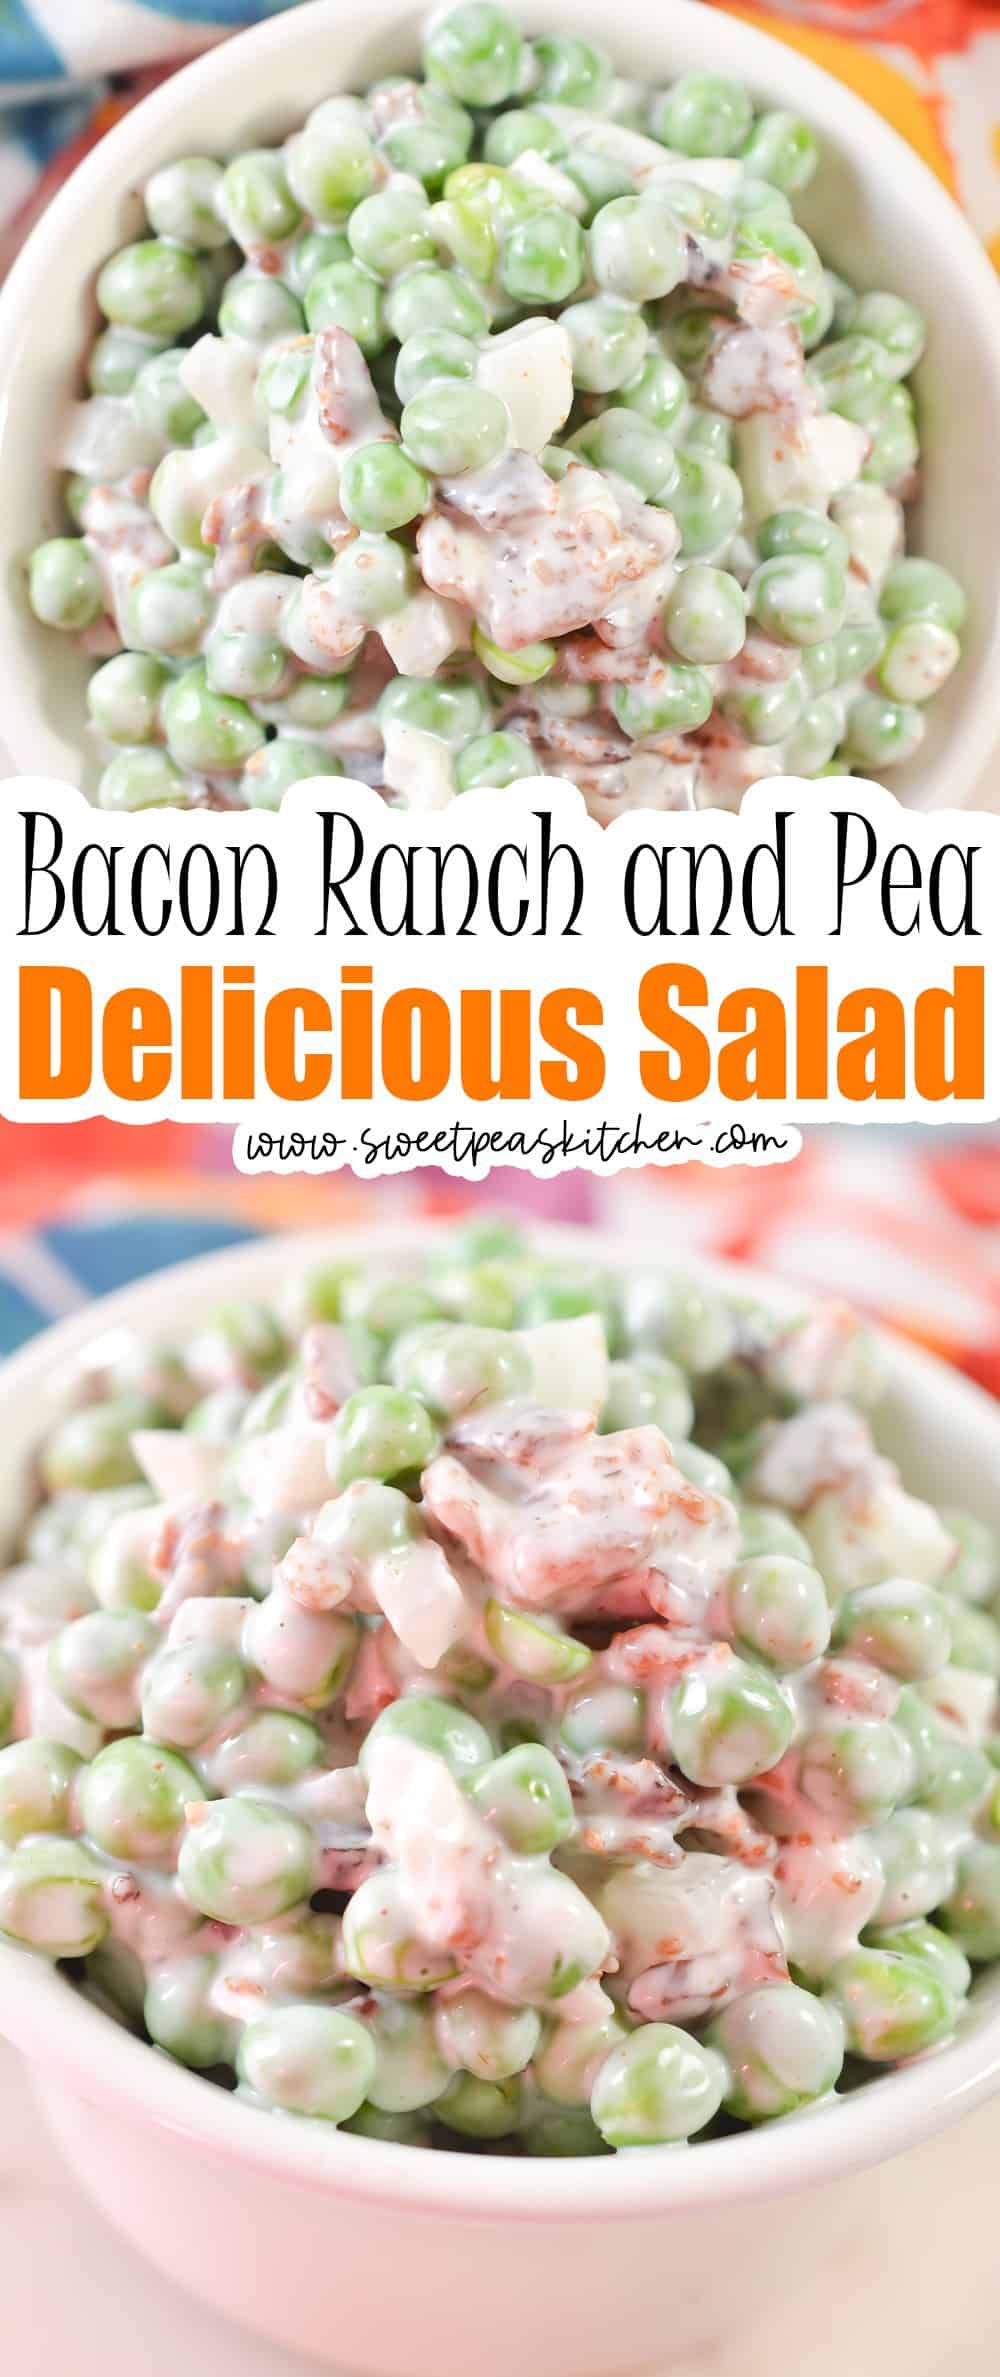 Bacon Ranch and Pea Salad